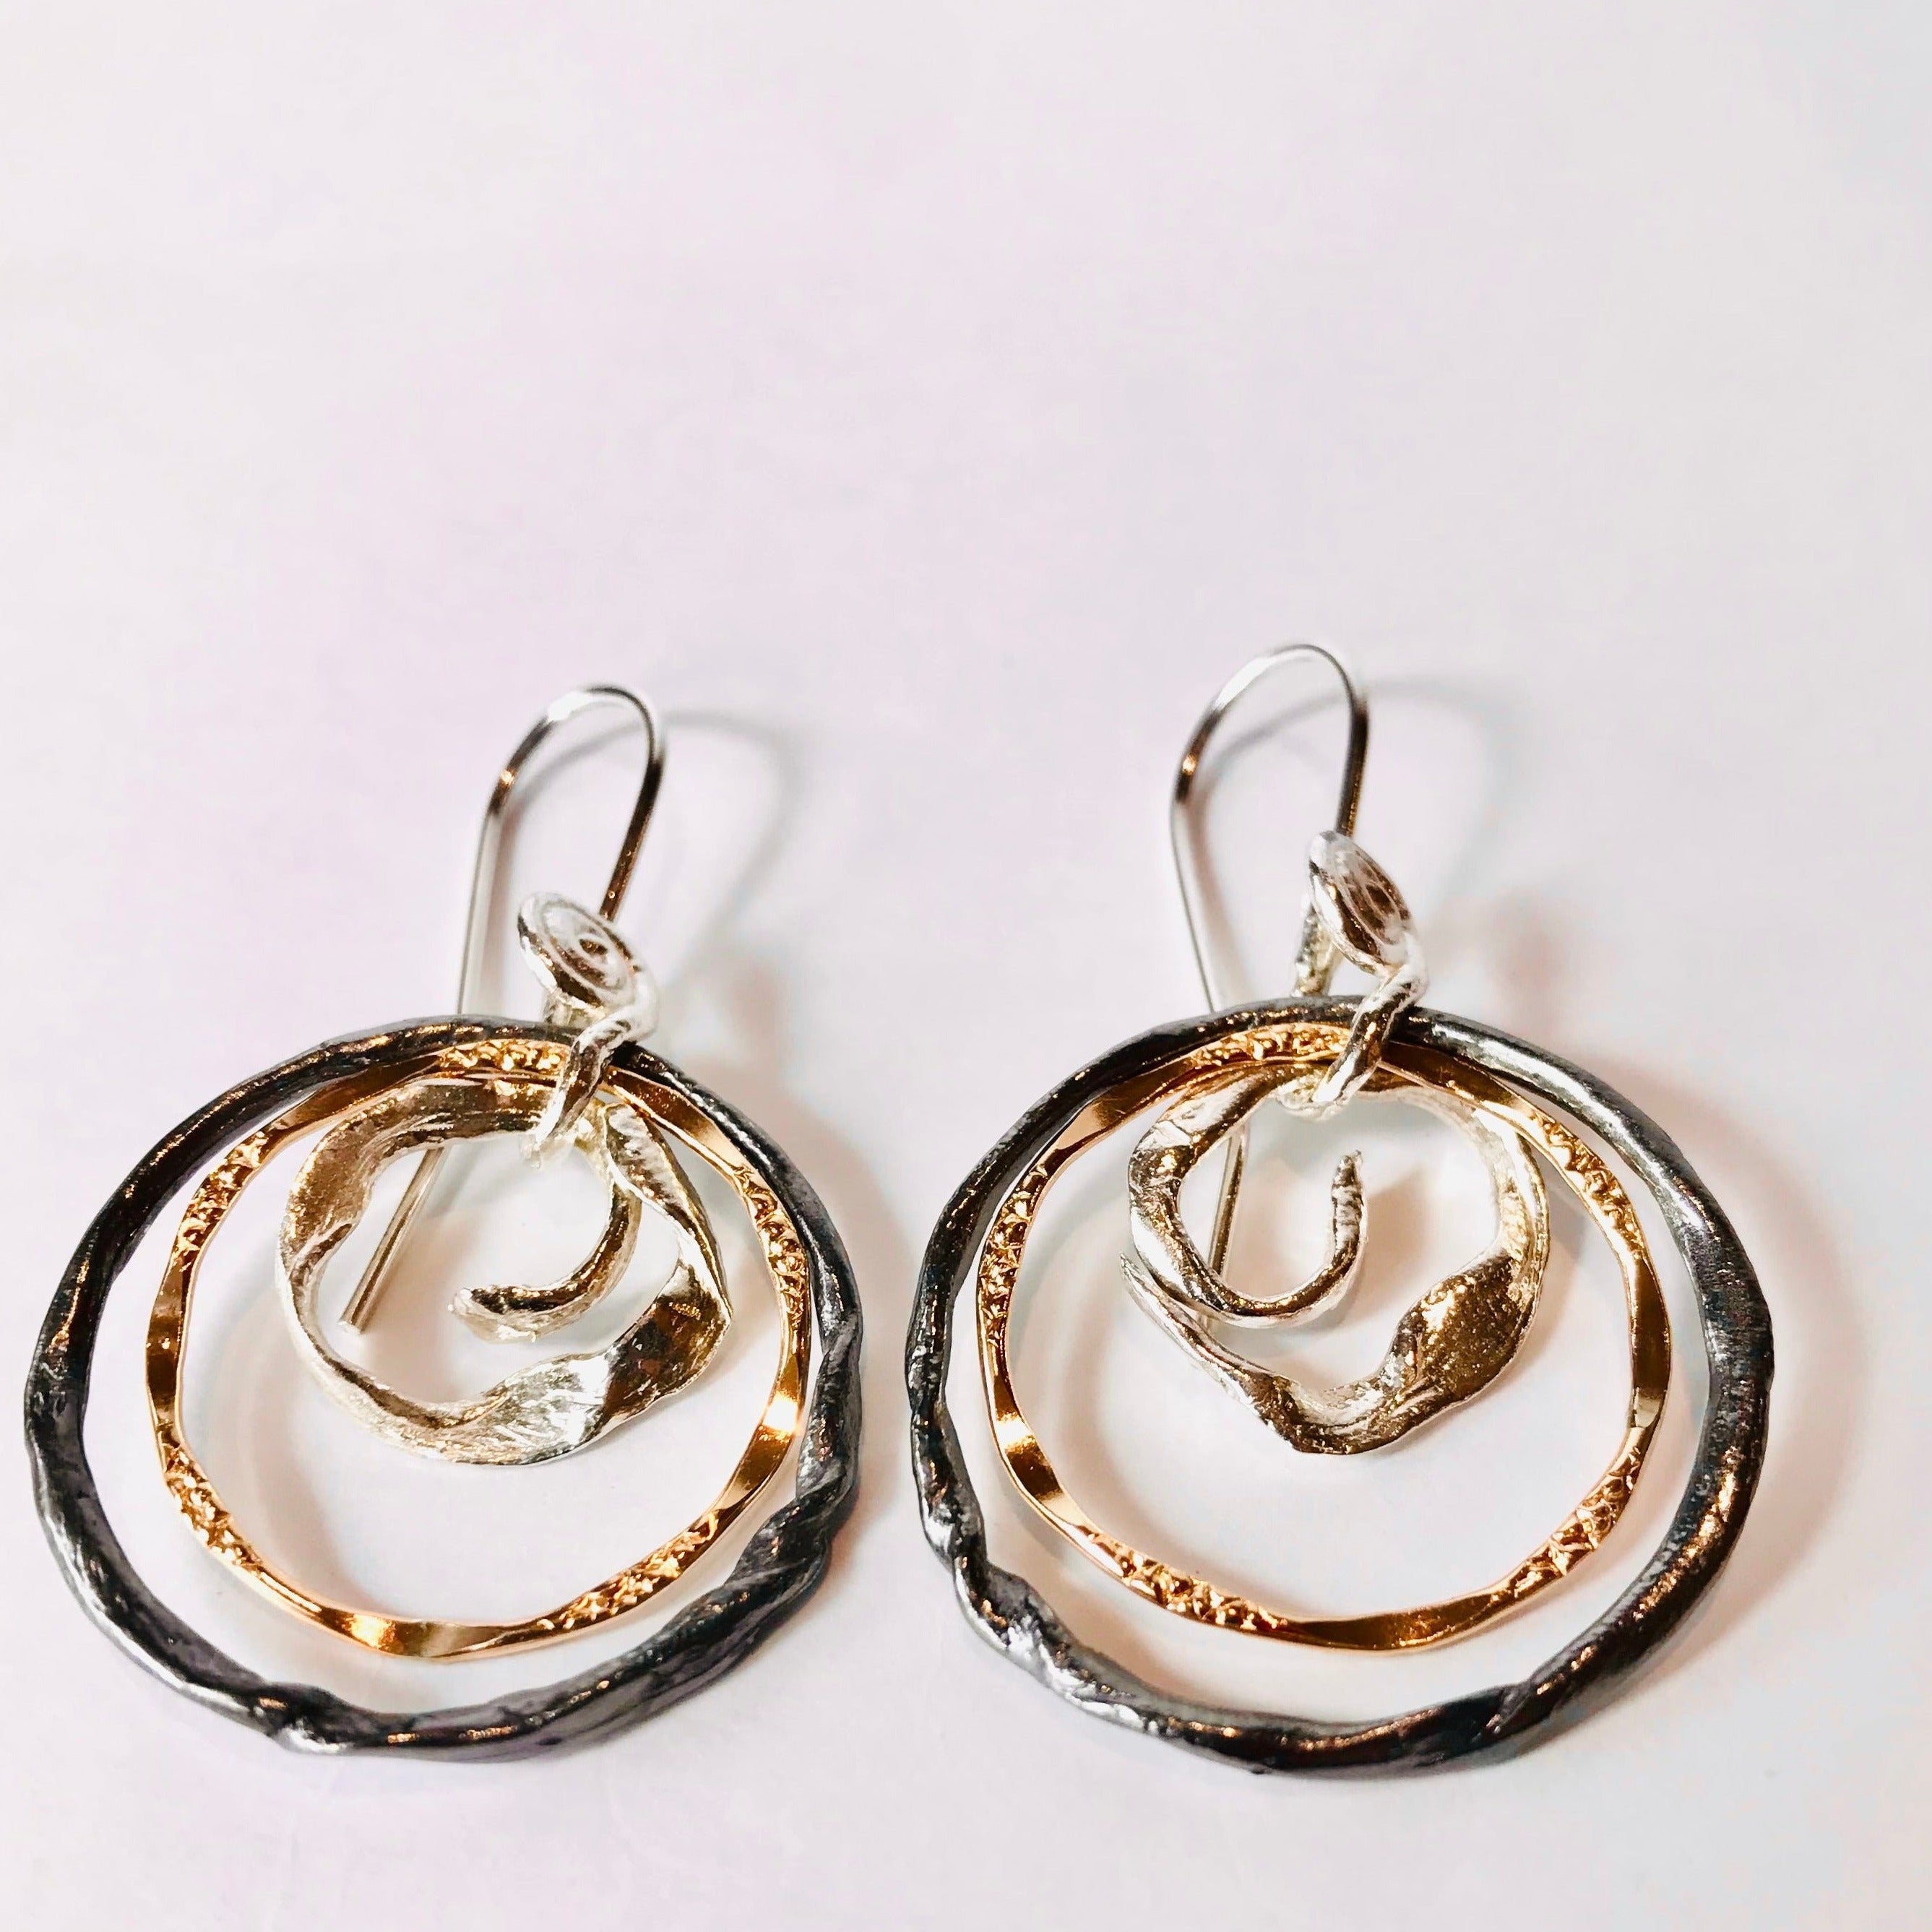 earrings - The Nancy Smillie Shop - Art, Jewellery & Designer Gifts Glasgow